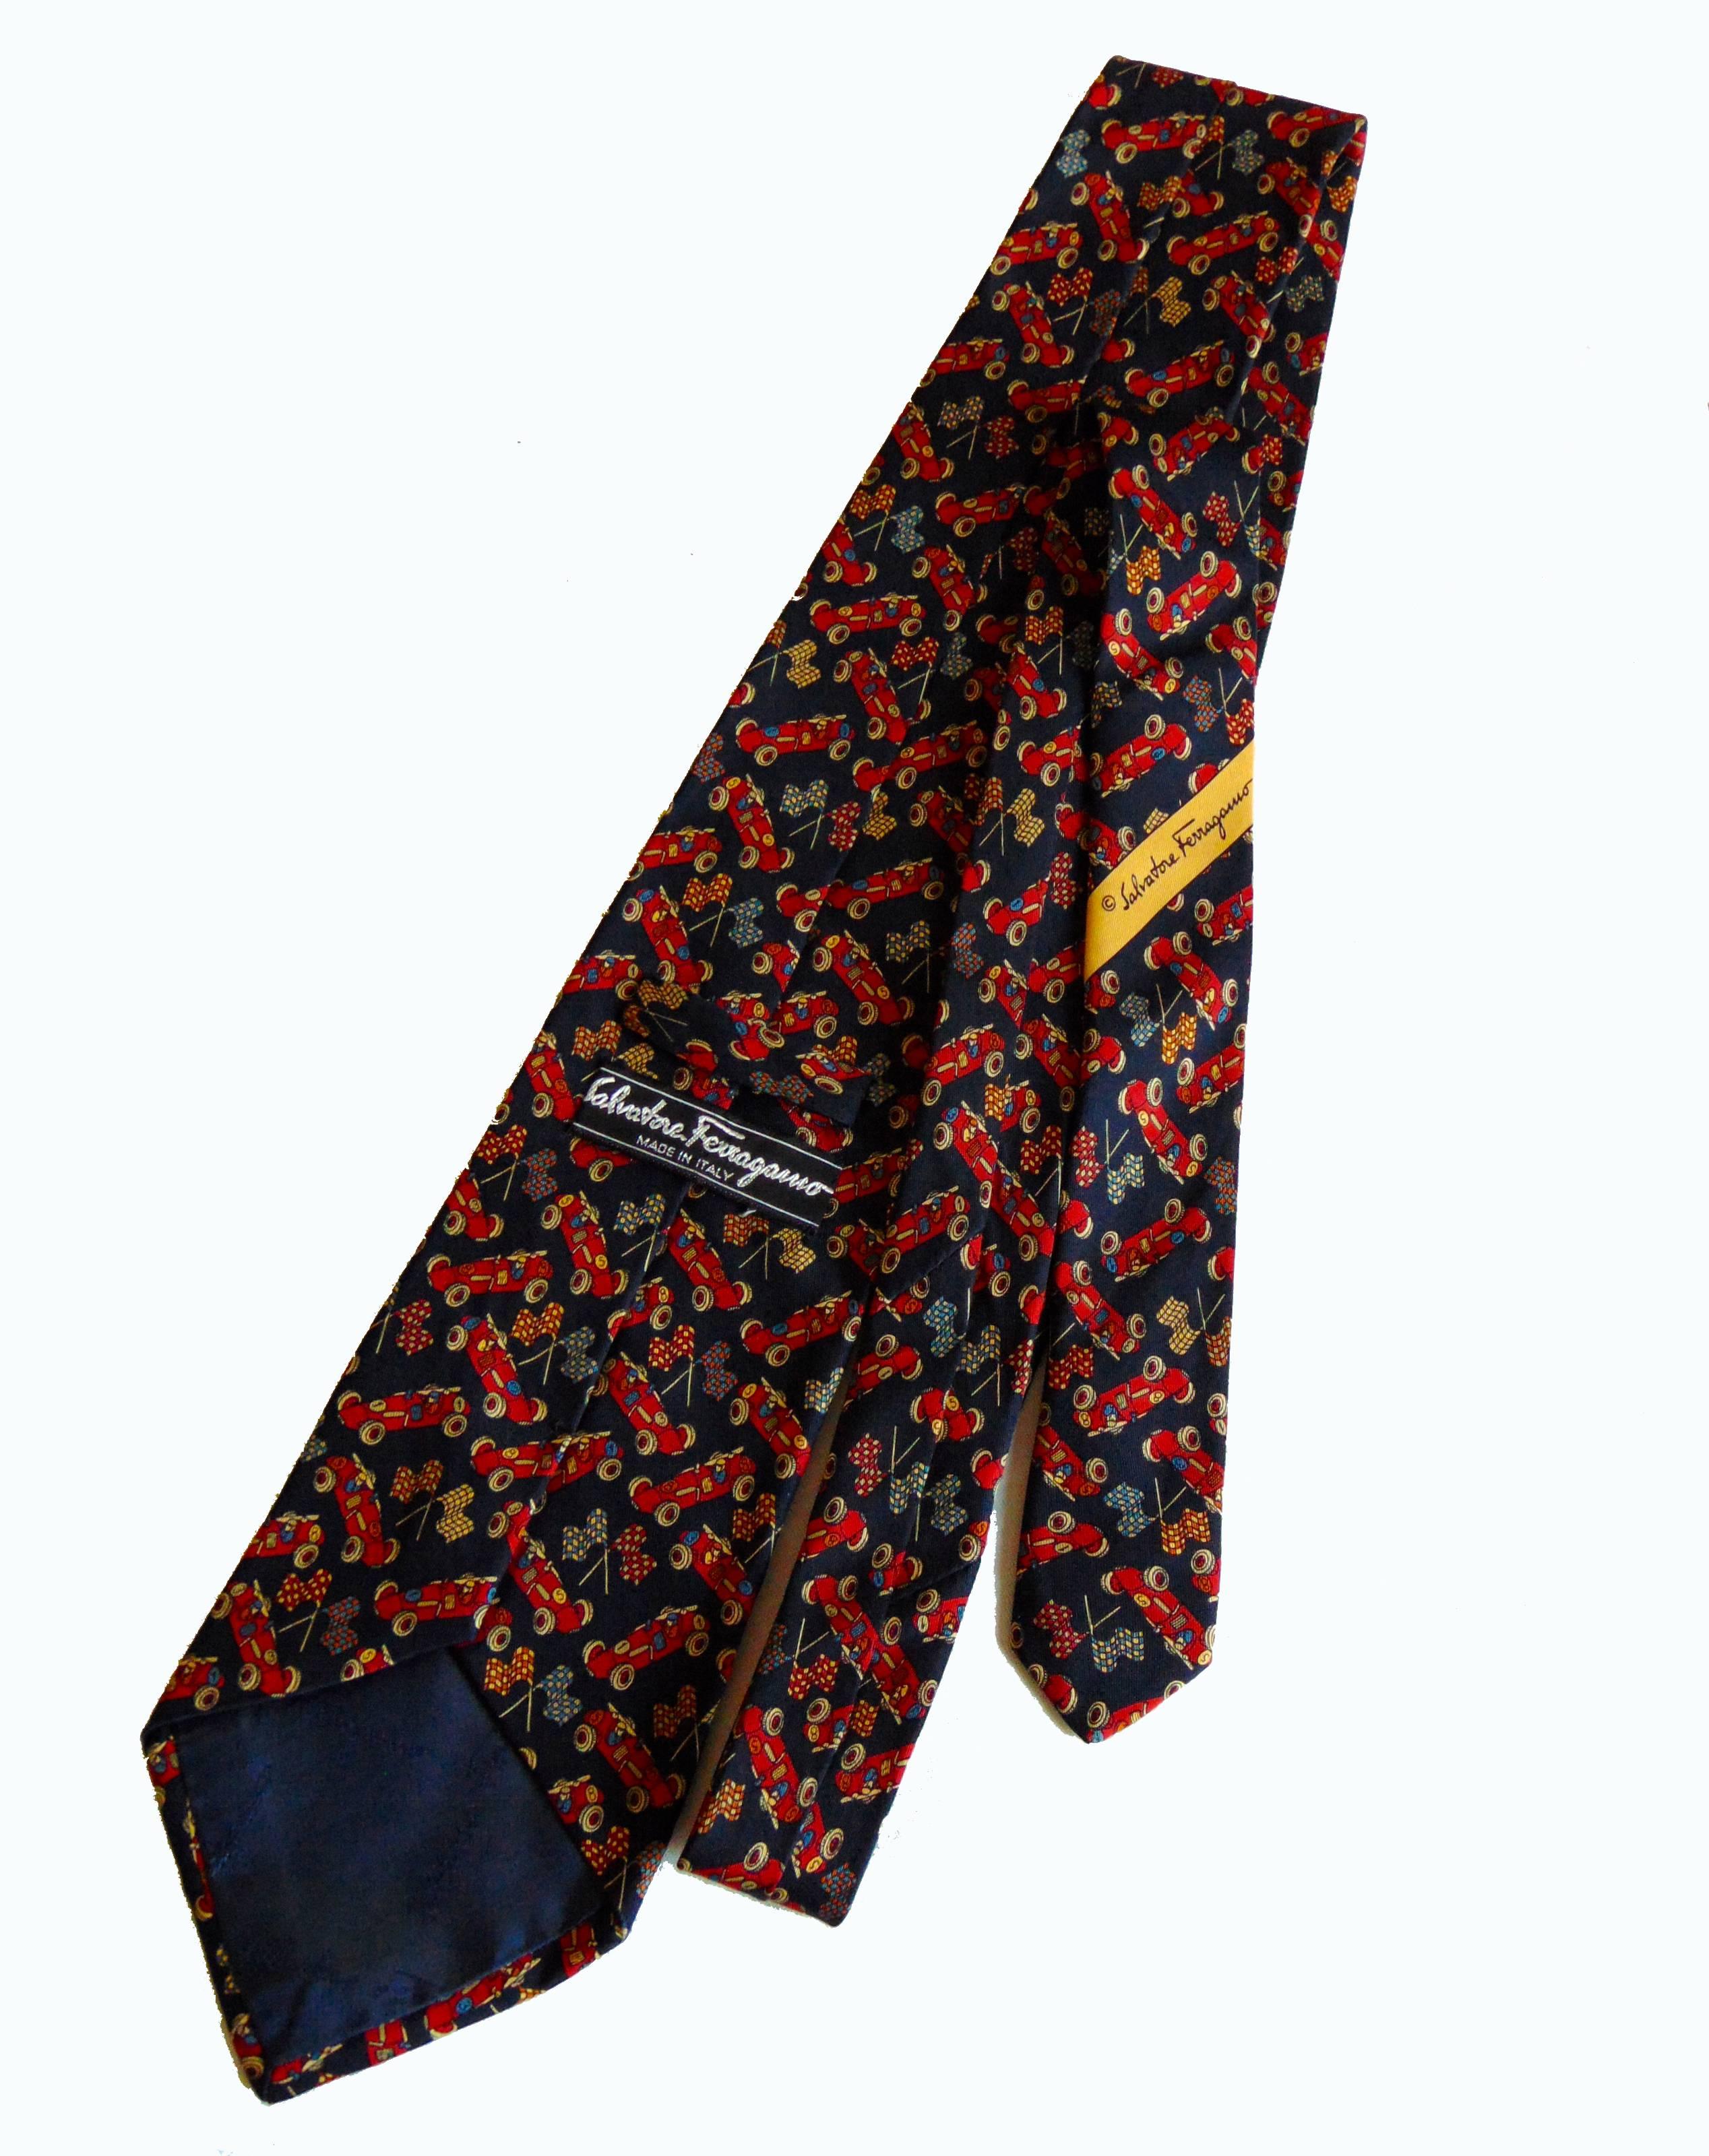 Authentic Salvatore Ferragamo Mens Silk Necktie Tie 
w/ Automobiles Cars Print.  In excellent condition.  Measures 59